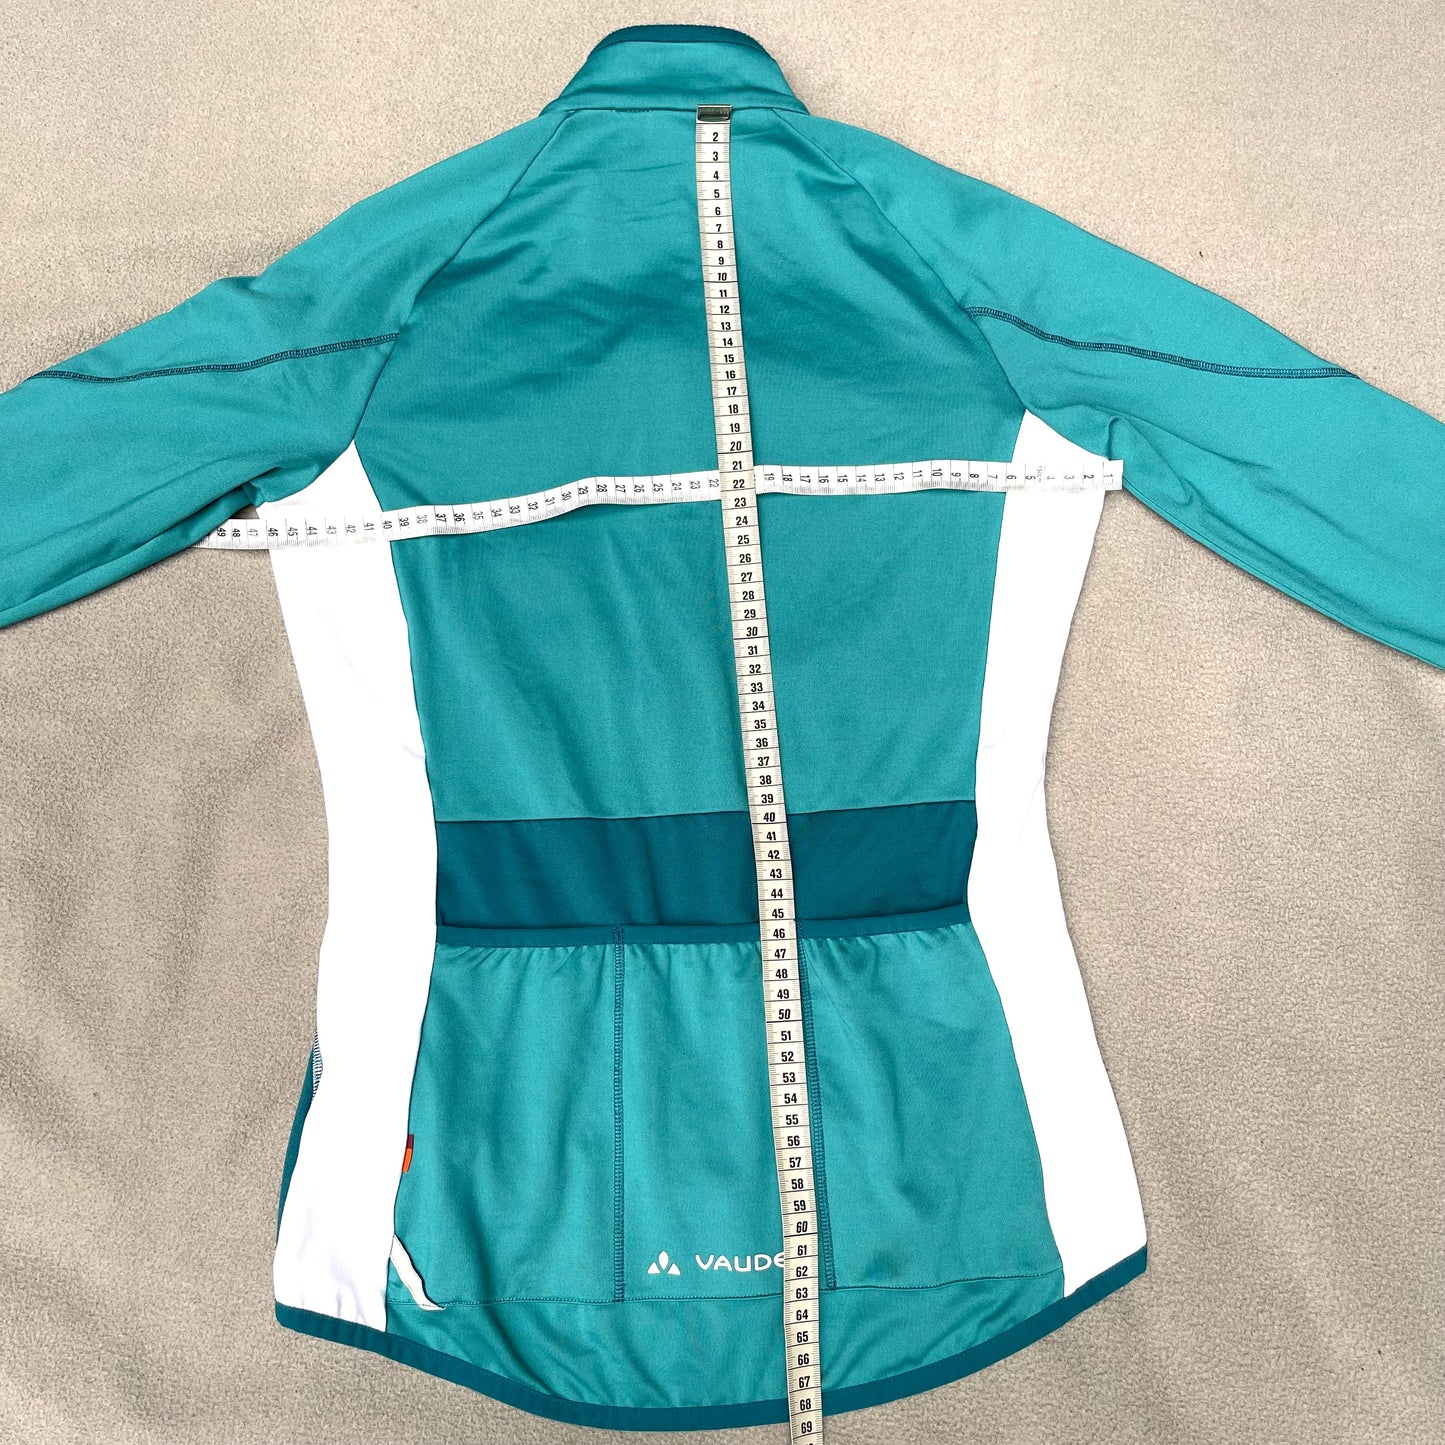 Vaude Fahrrad-Jacke Damen S Fleece inside türkis-weiß